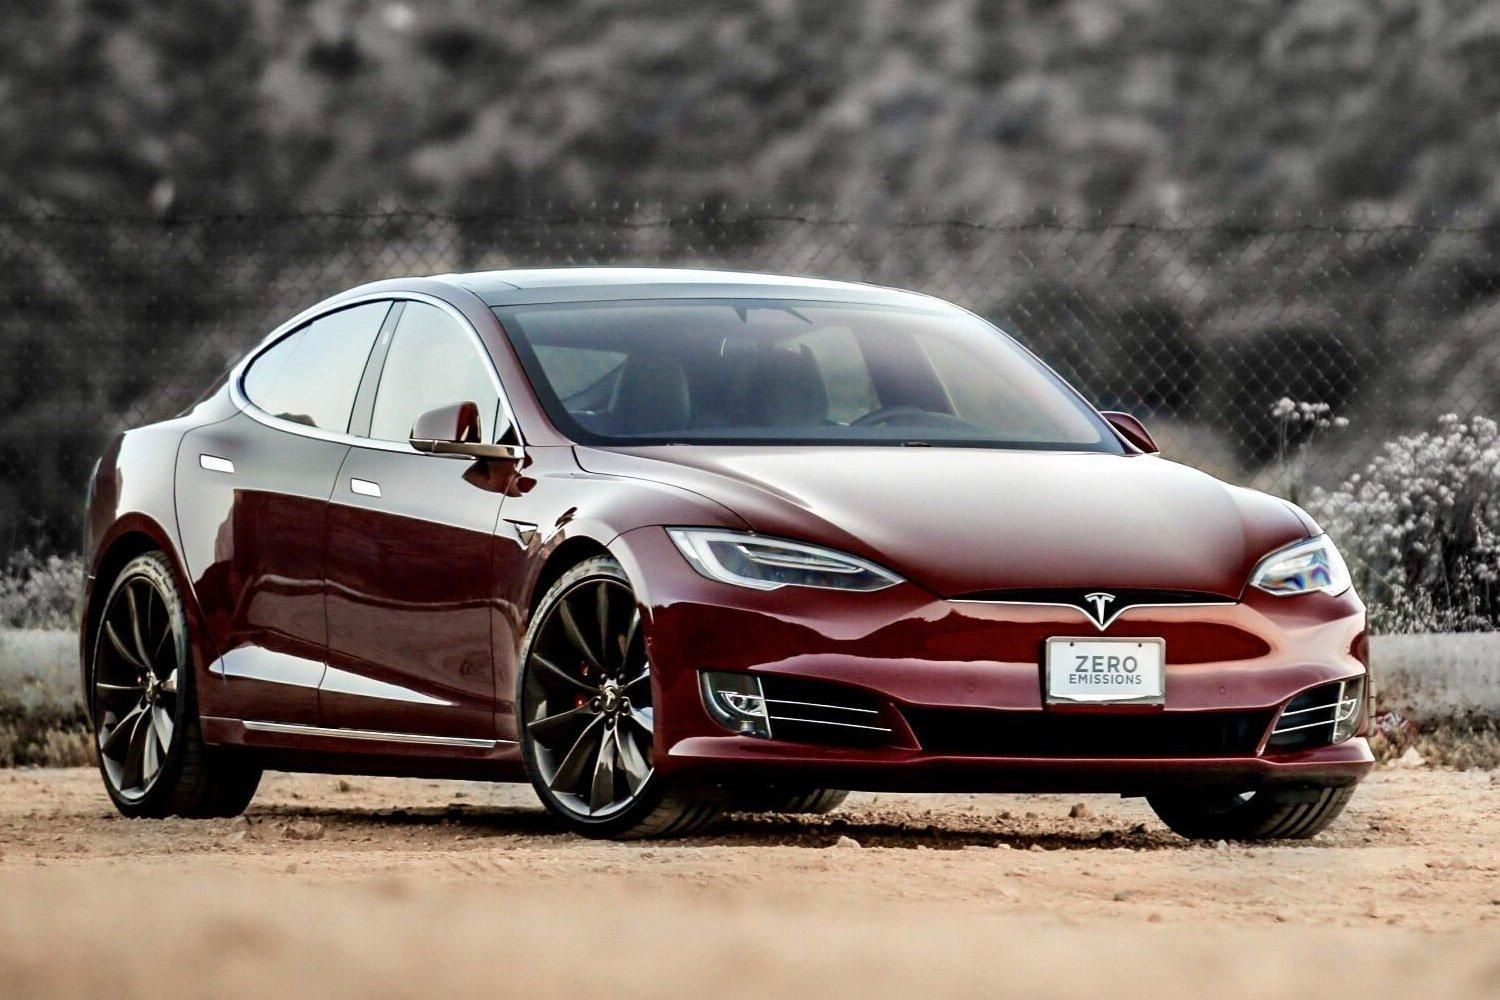 Скандальна аварія: Tesla на автопілоті врізалась у поліцейське авто